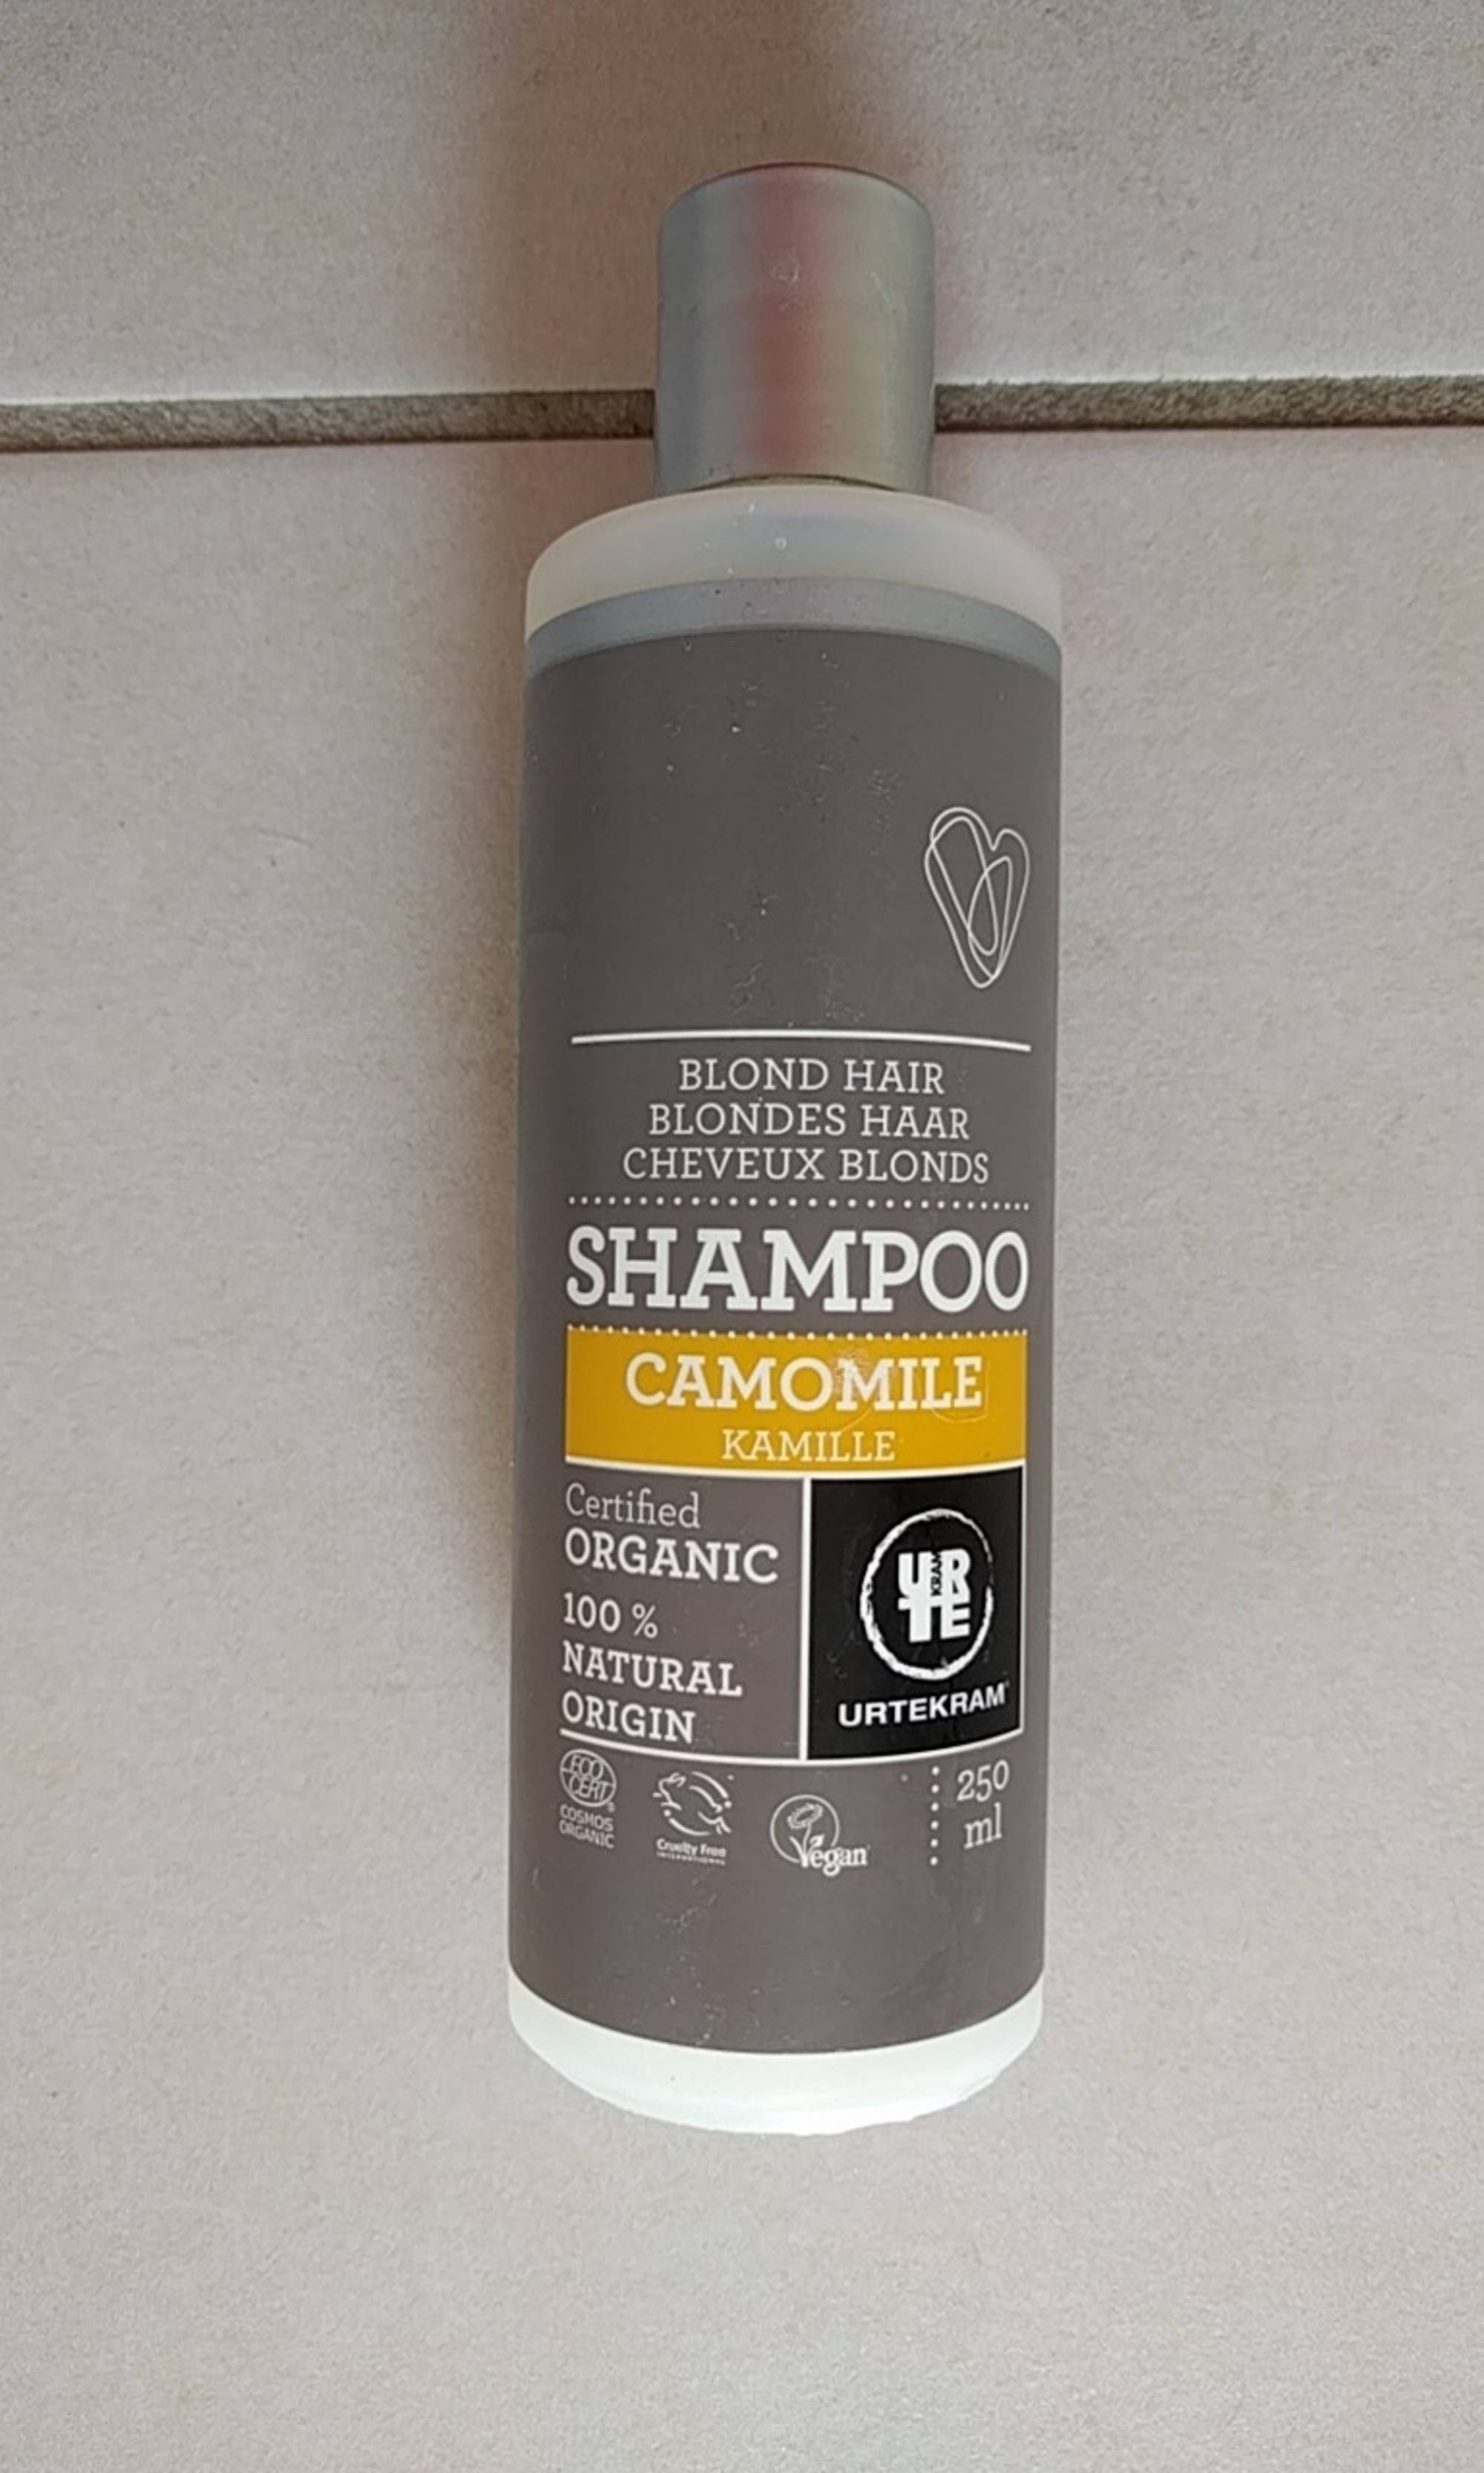 URTEKRAM - Camomille kamille - Shampoo